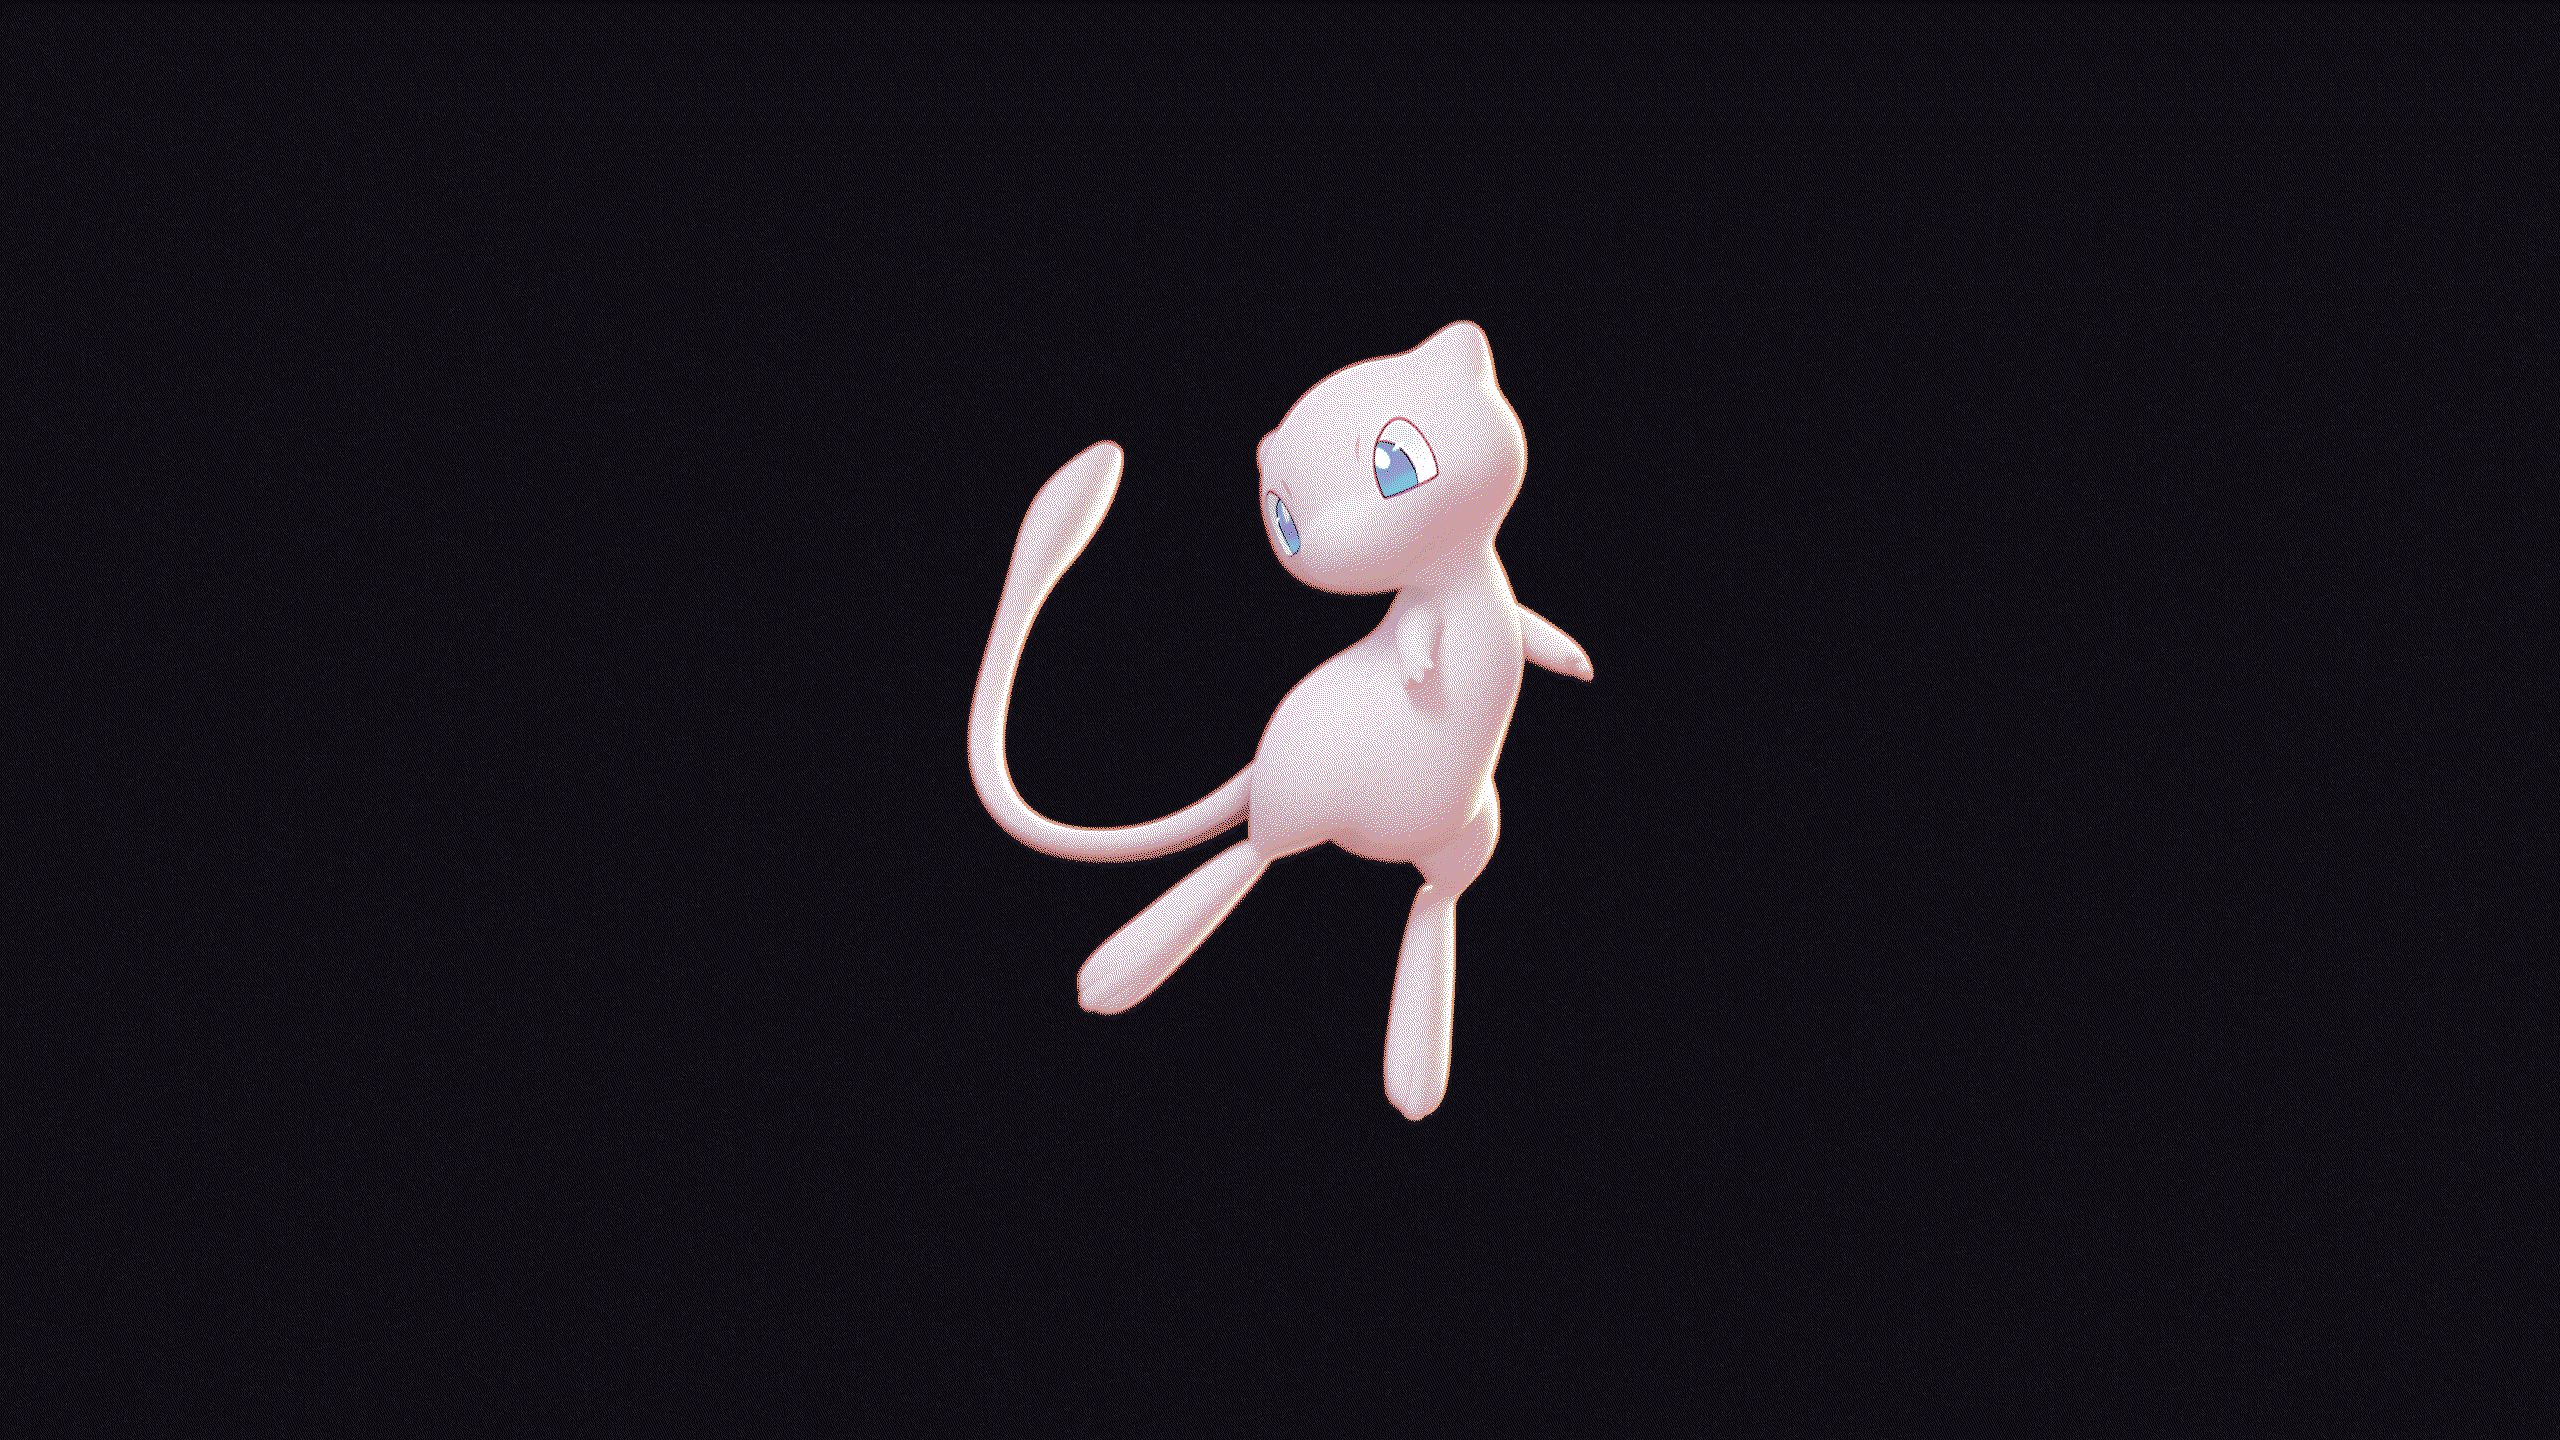 General 2560x1440 minimalism Pokemon Go Mew Pokémon simple background black background video game characters